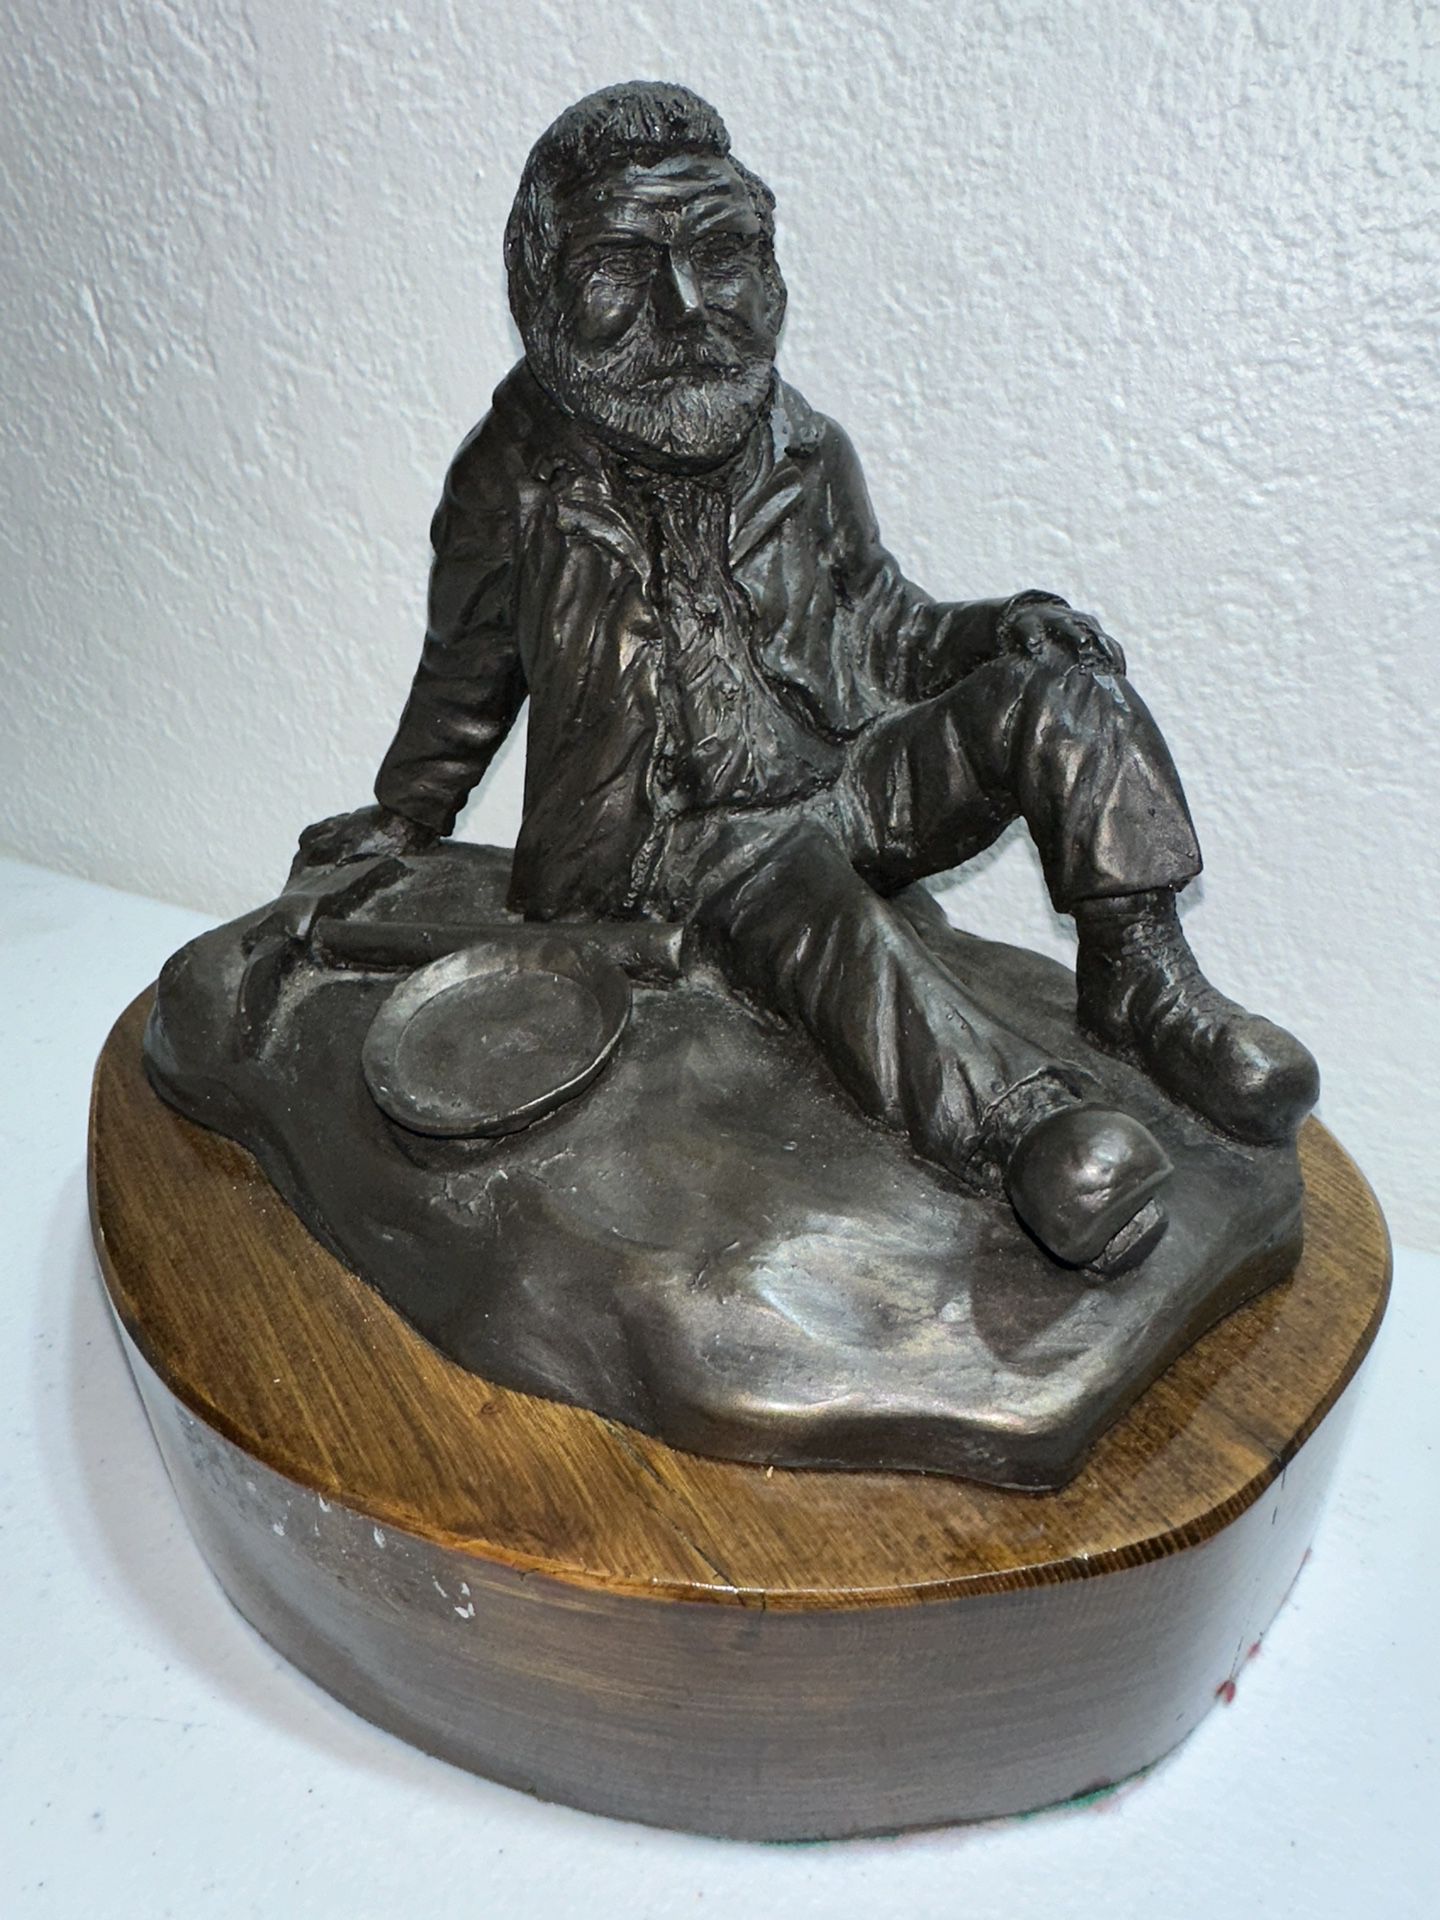 Mining Man  Sculpture Statue, 12 Of 100 Limited 8x8x8